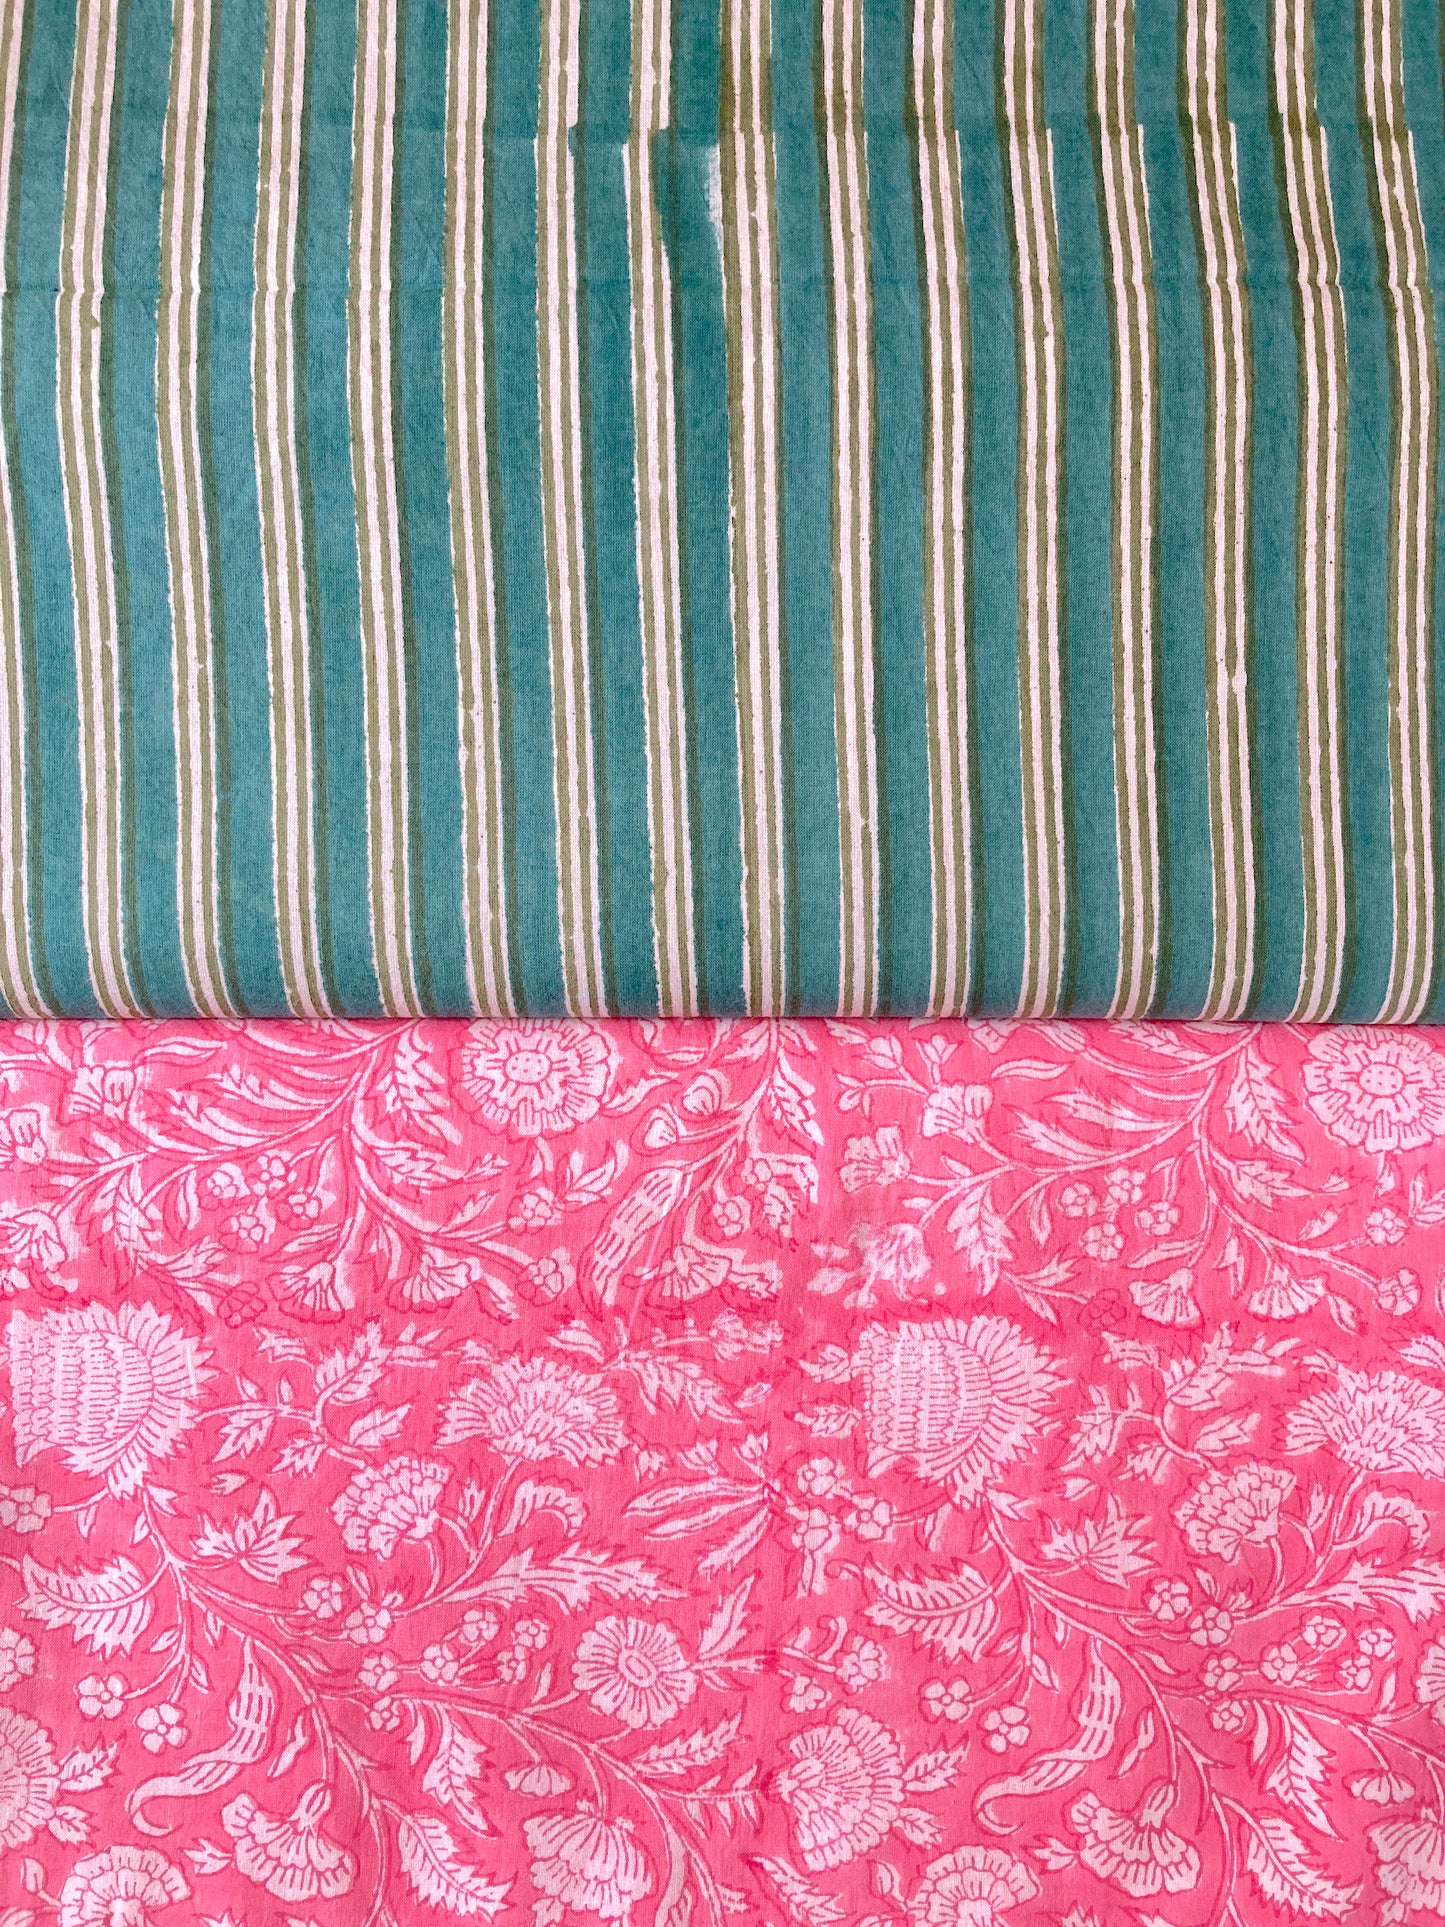 Hand Block Print Striped Green Fabric #207-4